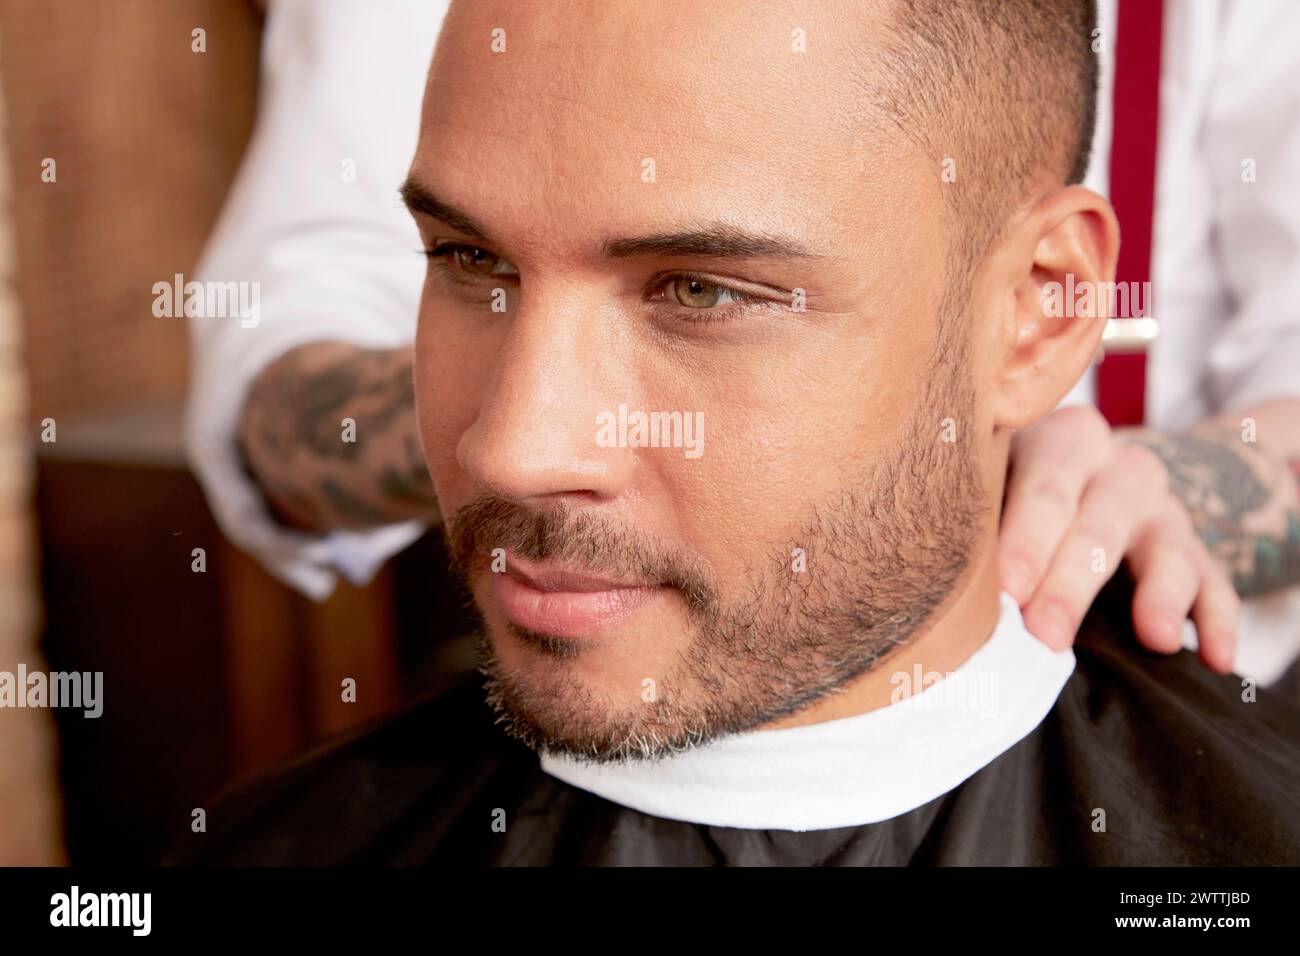 Man getting a haircut at a barbershop Stock Photo